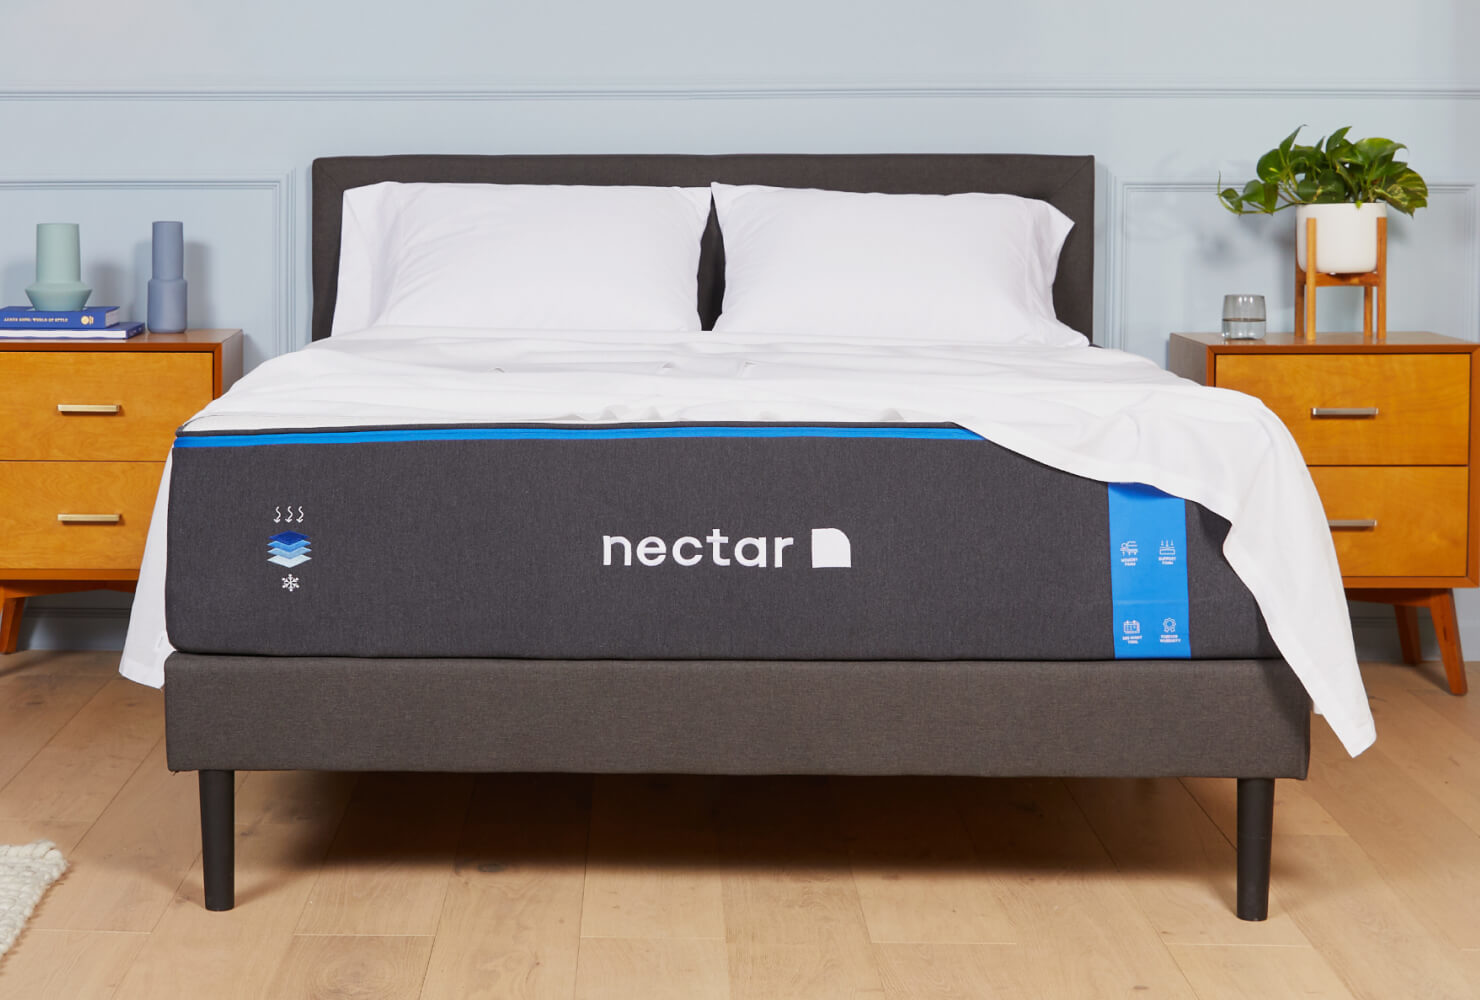 Nectar Original mattress in a bedroom setting